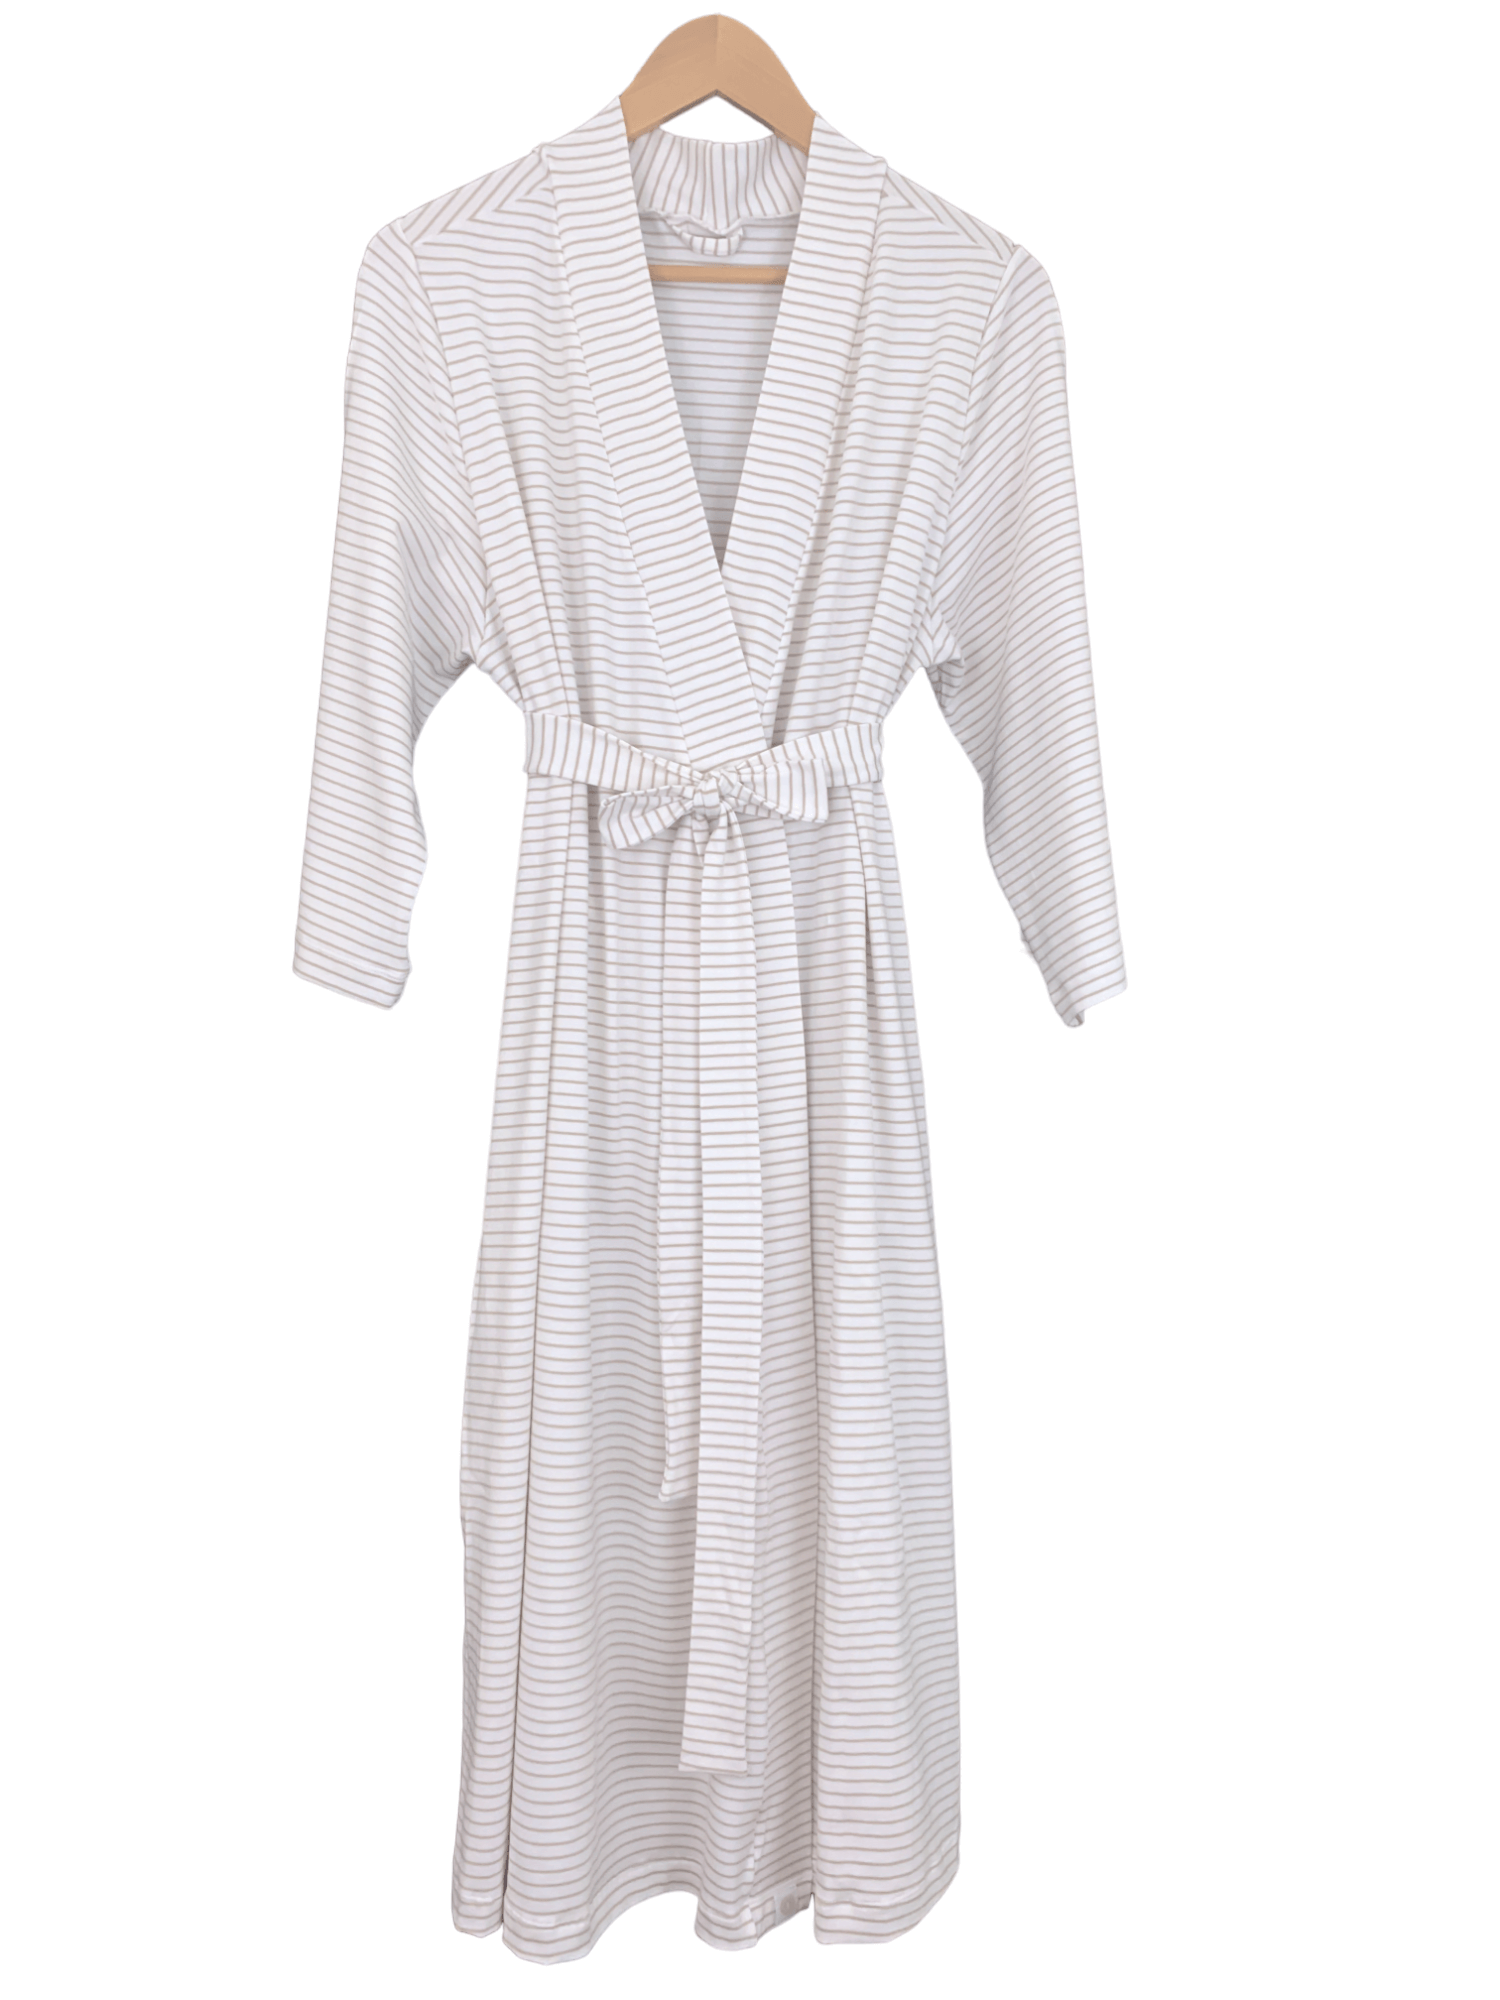 Light beige stripe mommy robe.